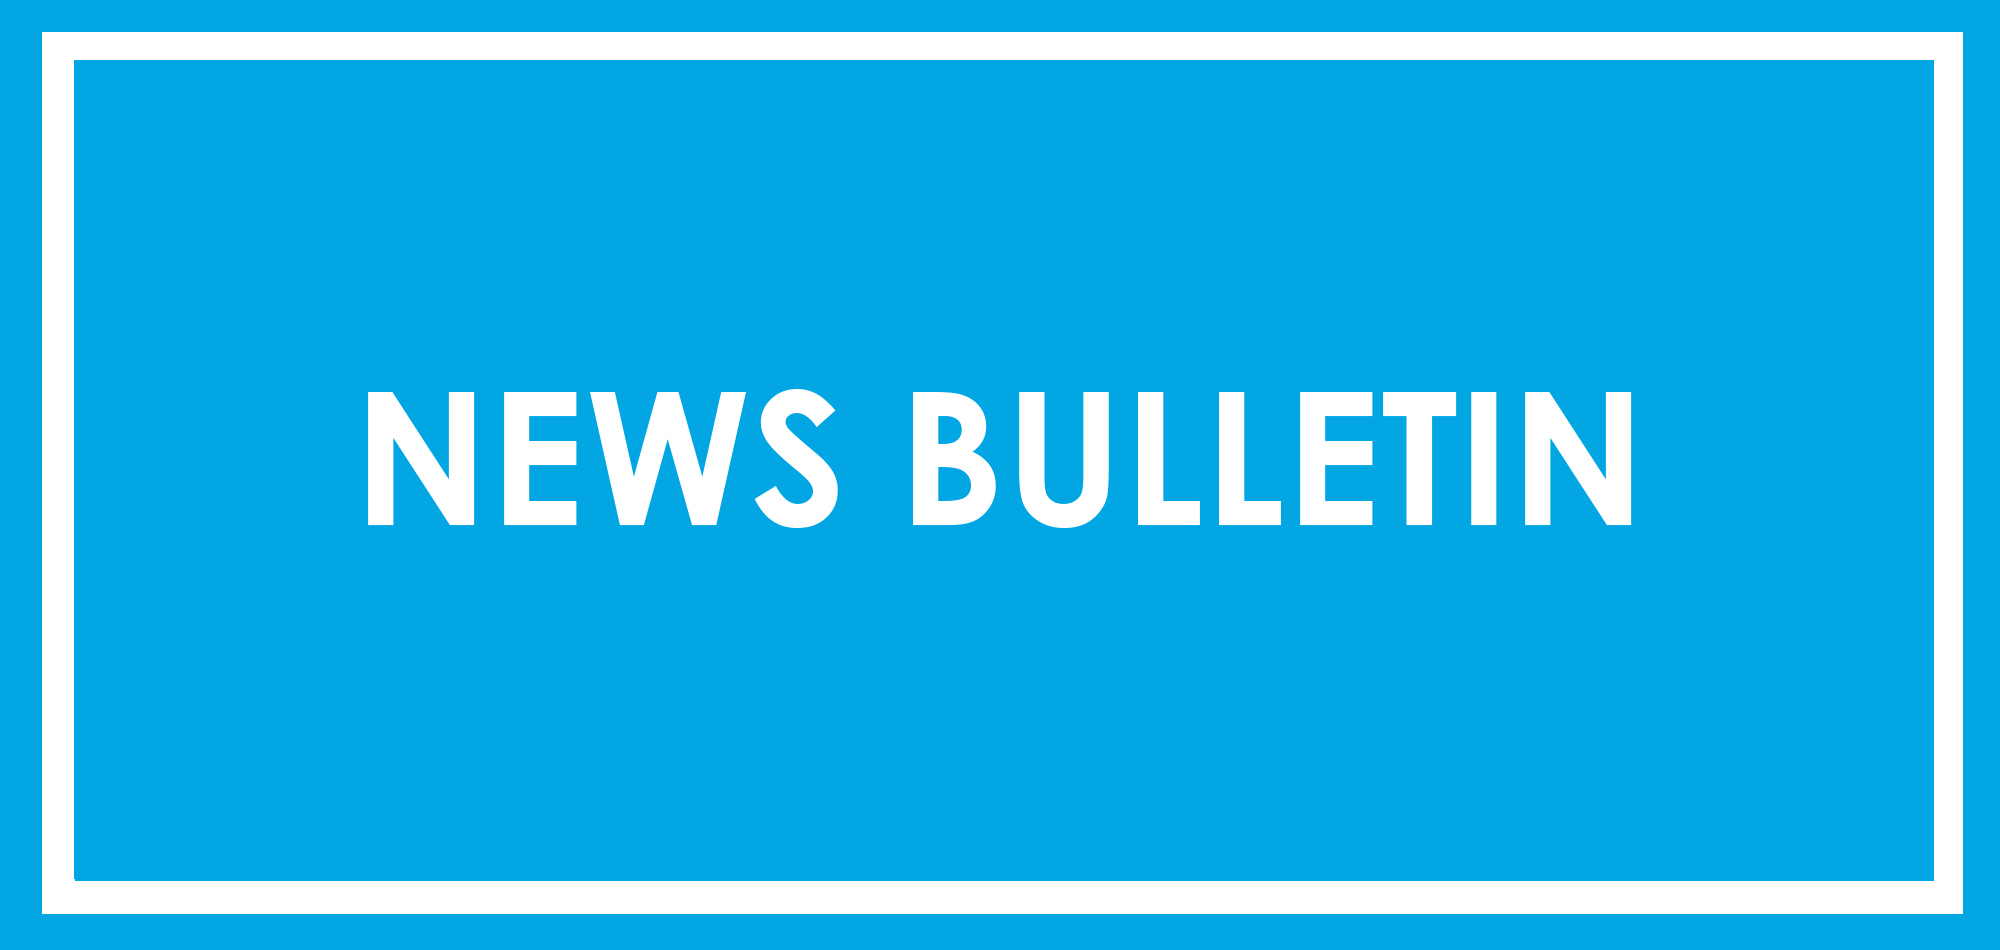 News Bulletin - 02.03.21